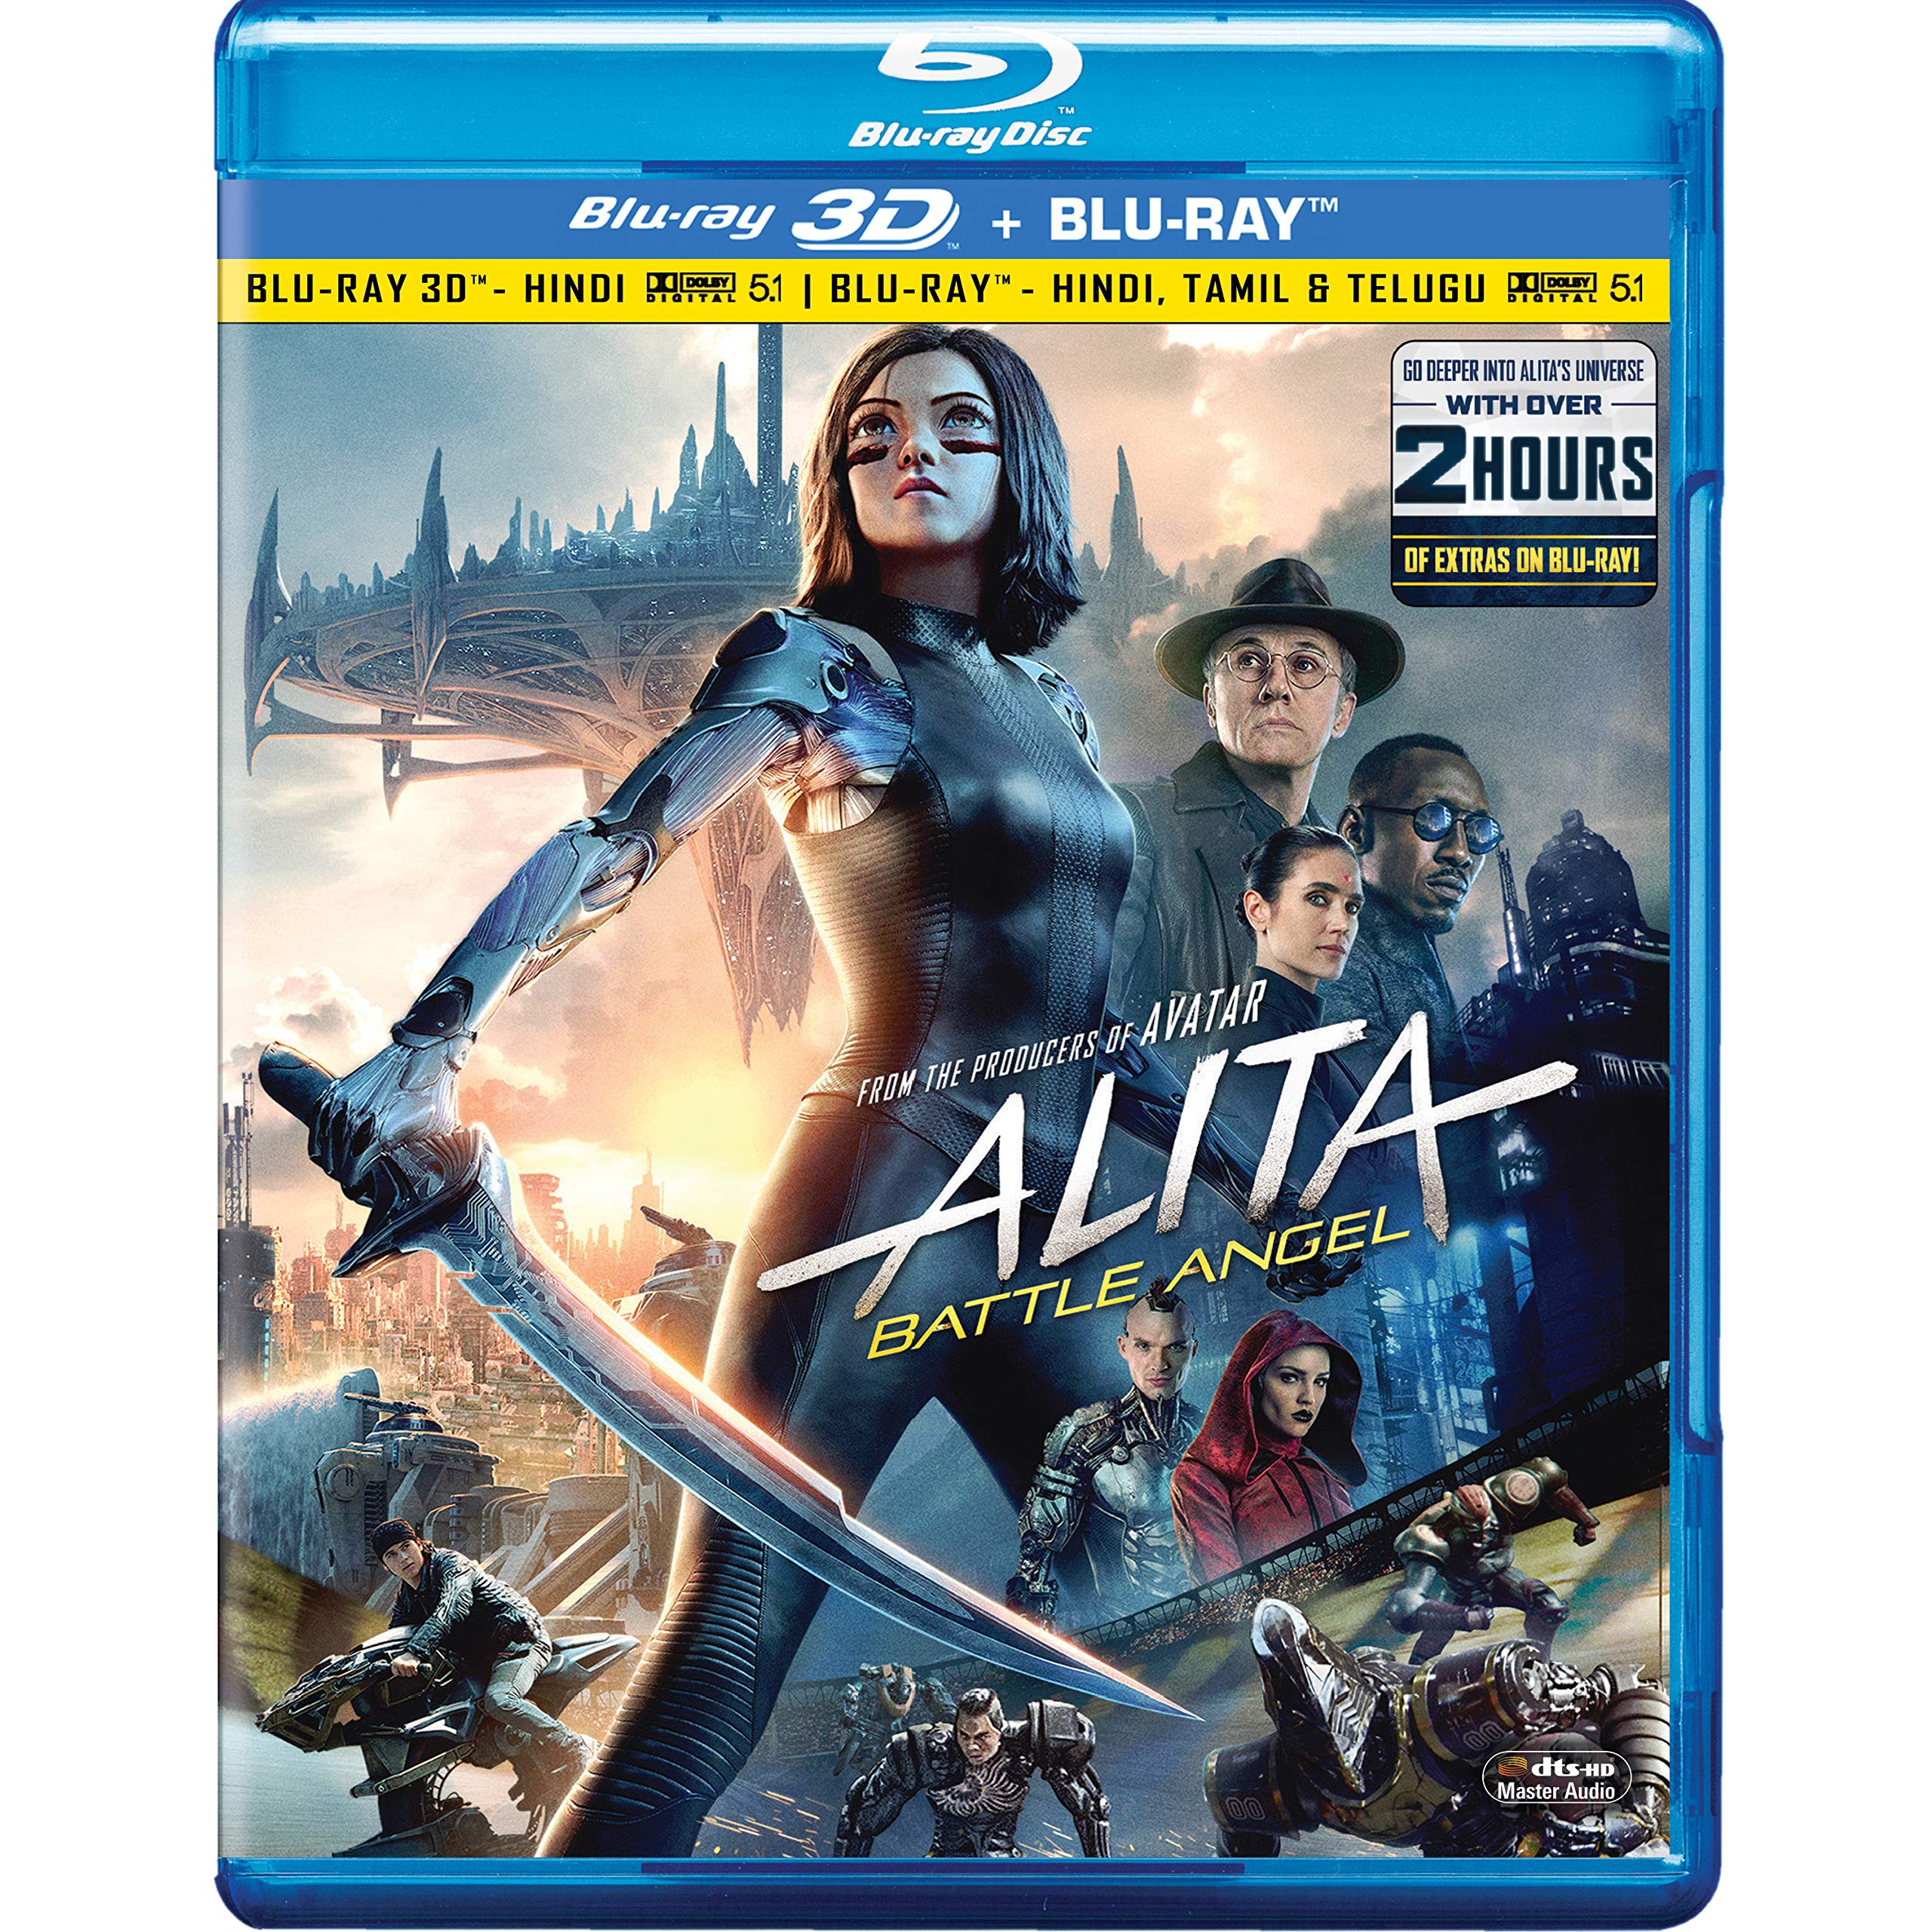 alita-battle-angel-blu-ray-3d-blu-ray-2-disc-movie-purchase-or